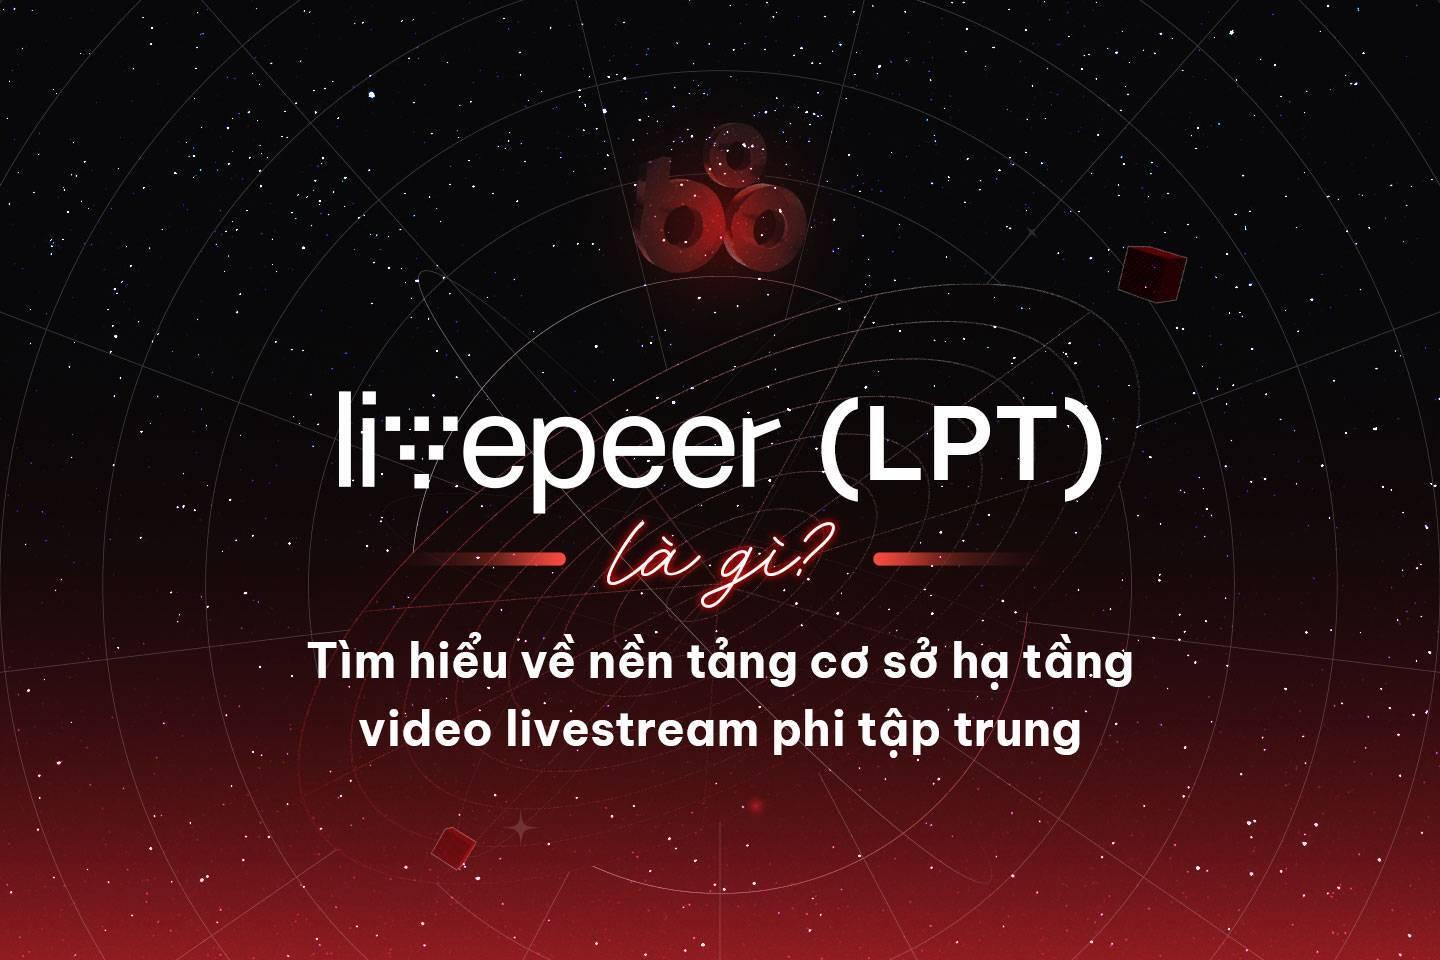 livepeer-lpt-la-gi-tim-hieu-ve-nen-tang-co-so-ha-tang-video-livestream-phi-tap-trung